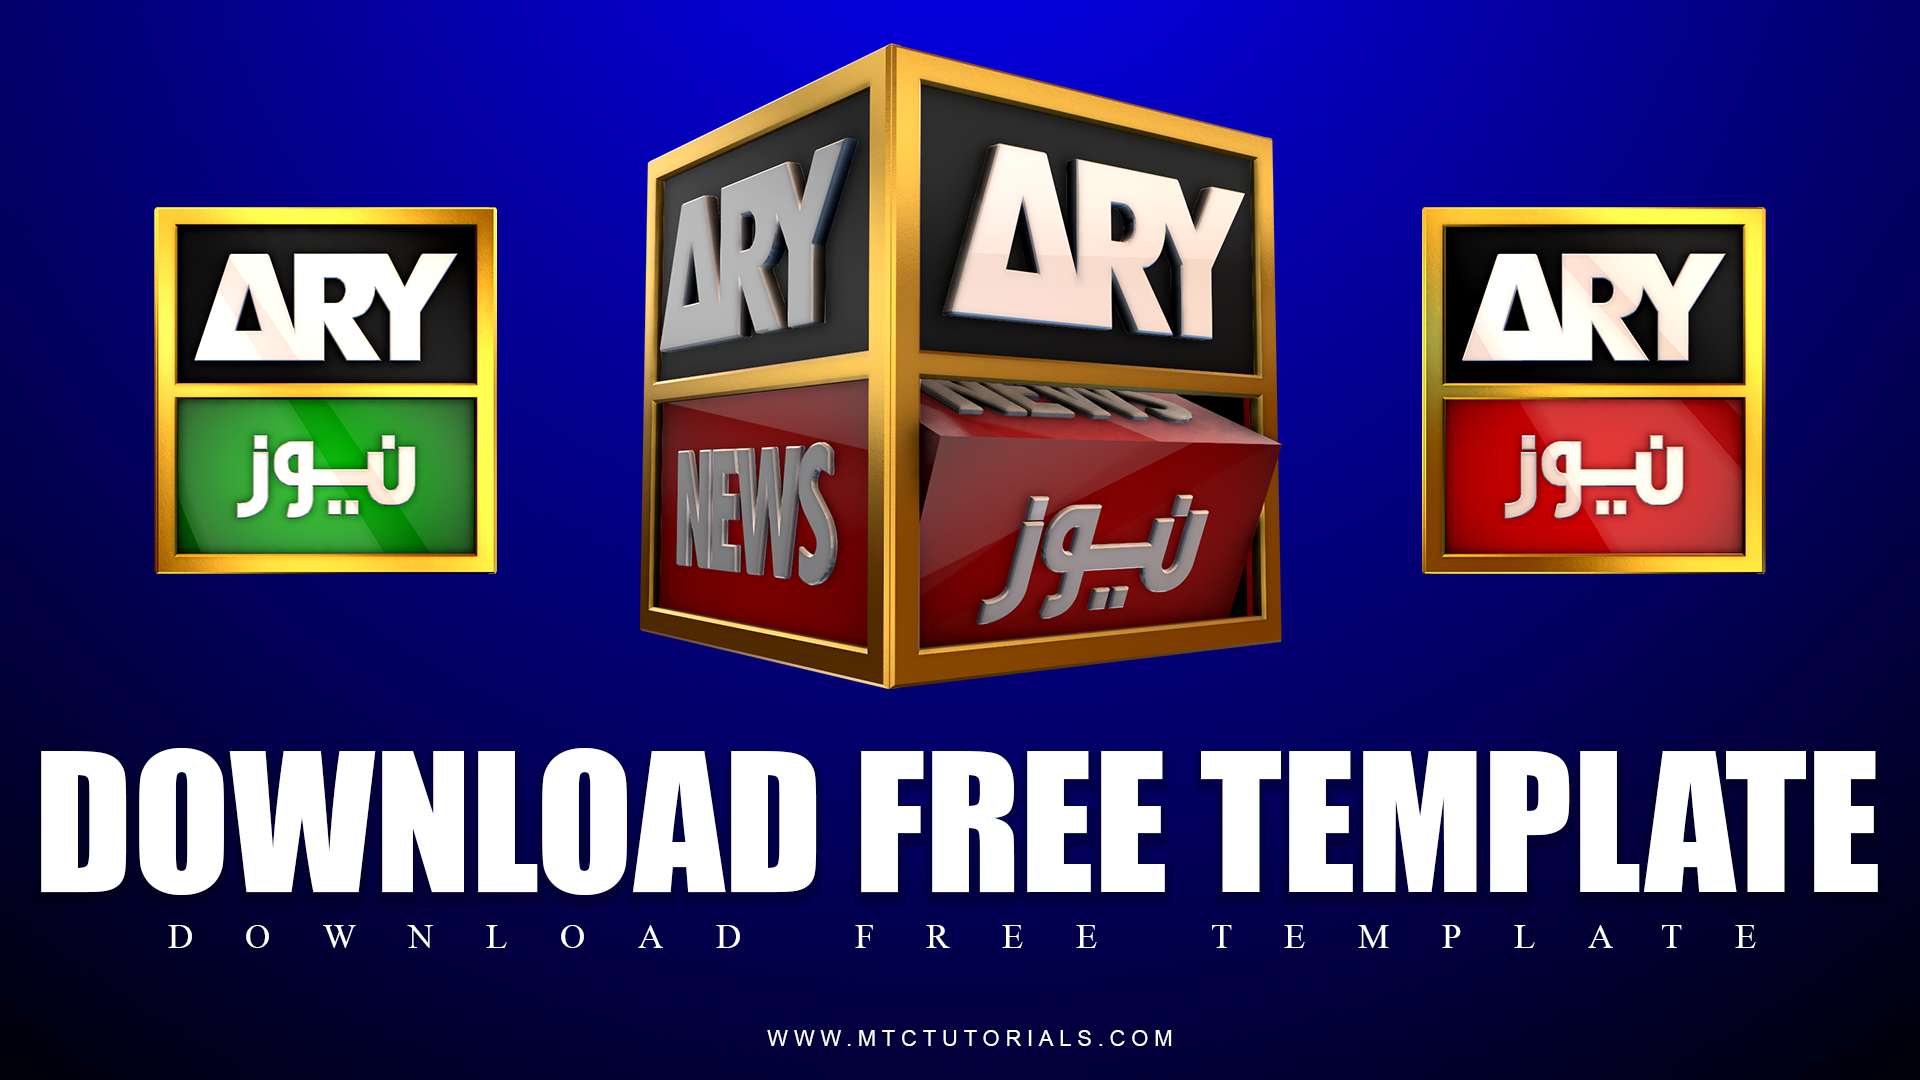 Create Your Own News Logo Like ARY News mtc tutorials